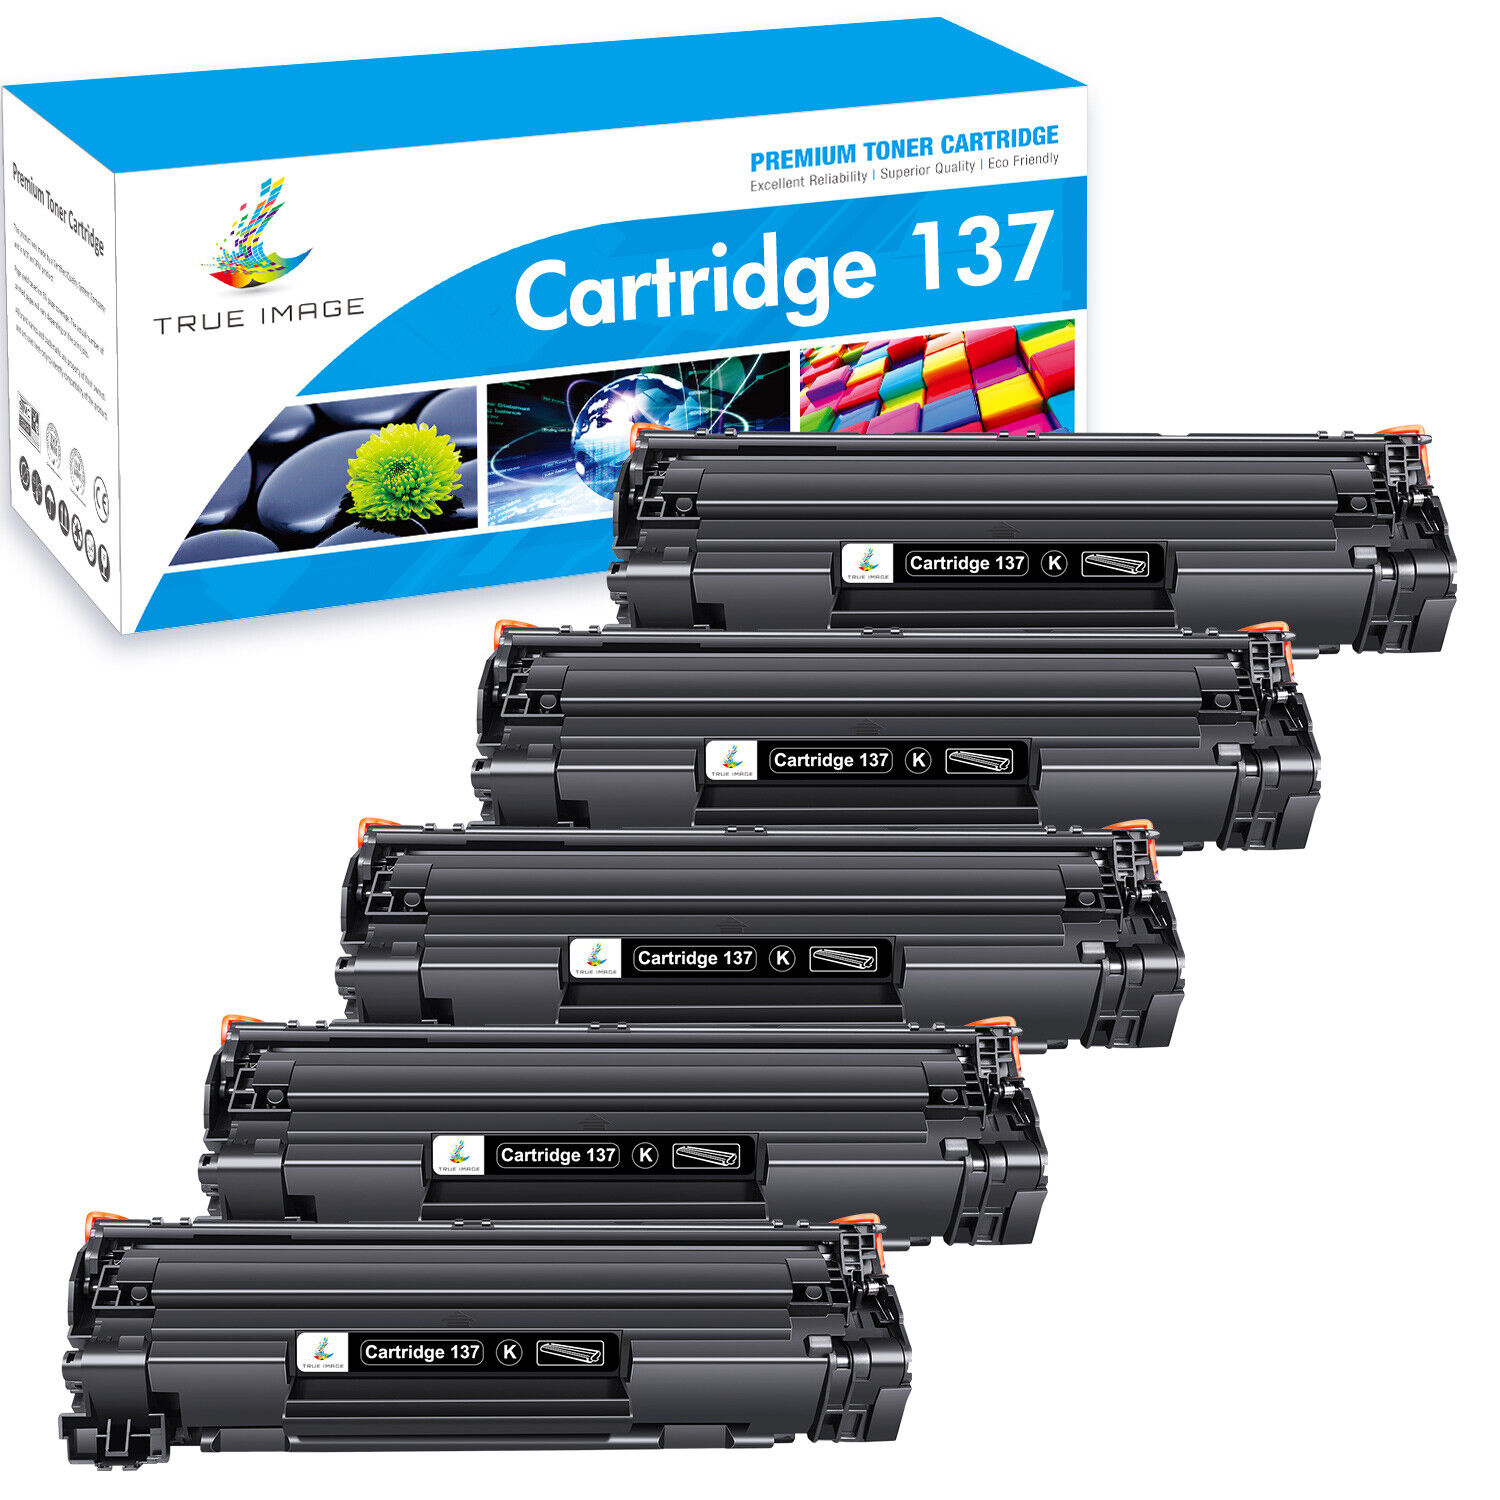 1-20x Toner Compatible for Canon 137 ImageClass MF210 MF220 MF230 MF240 D570 lot